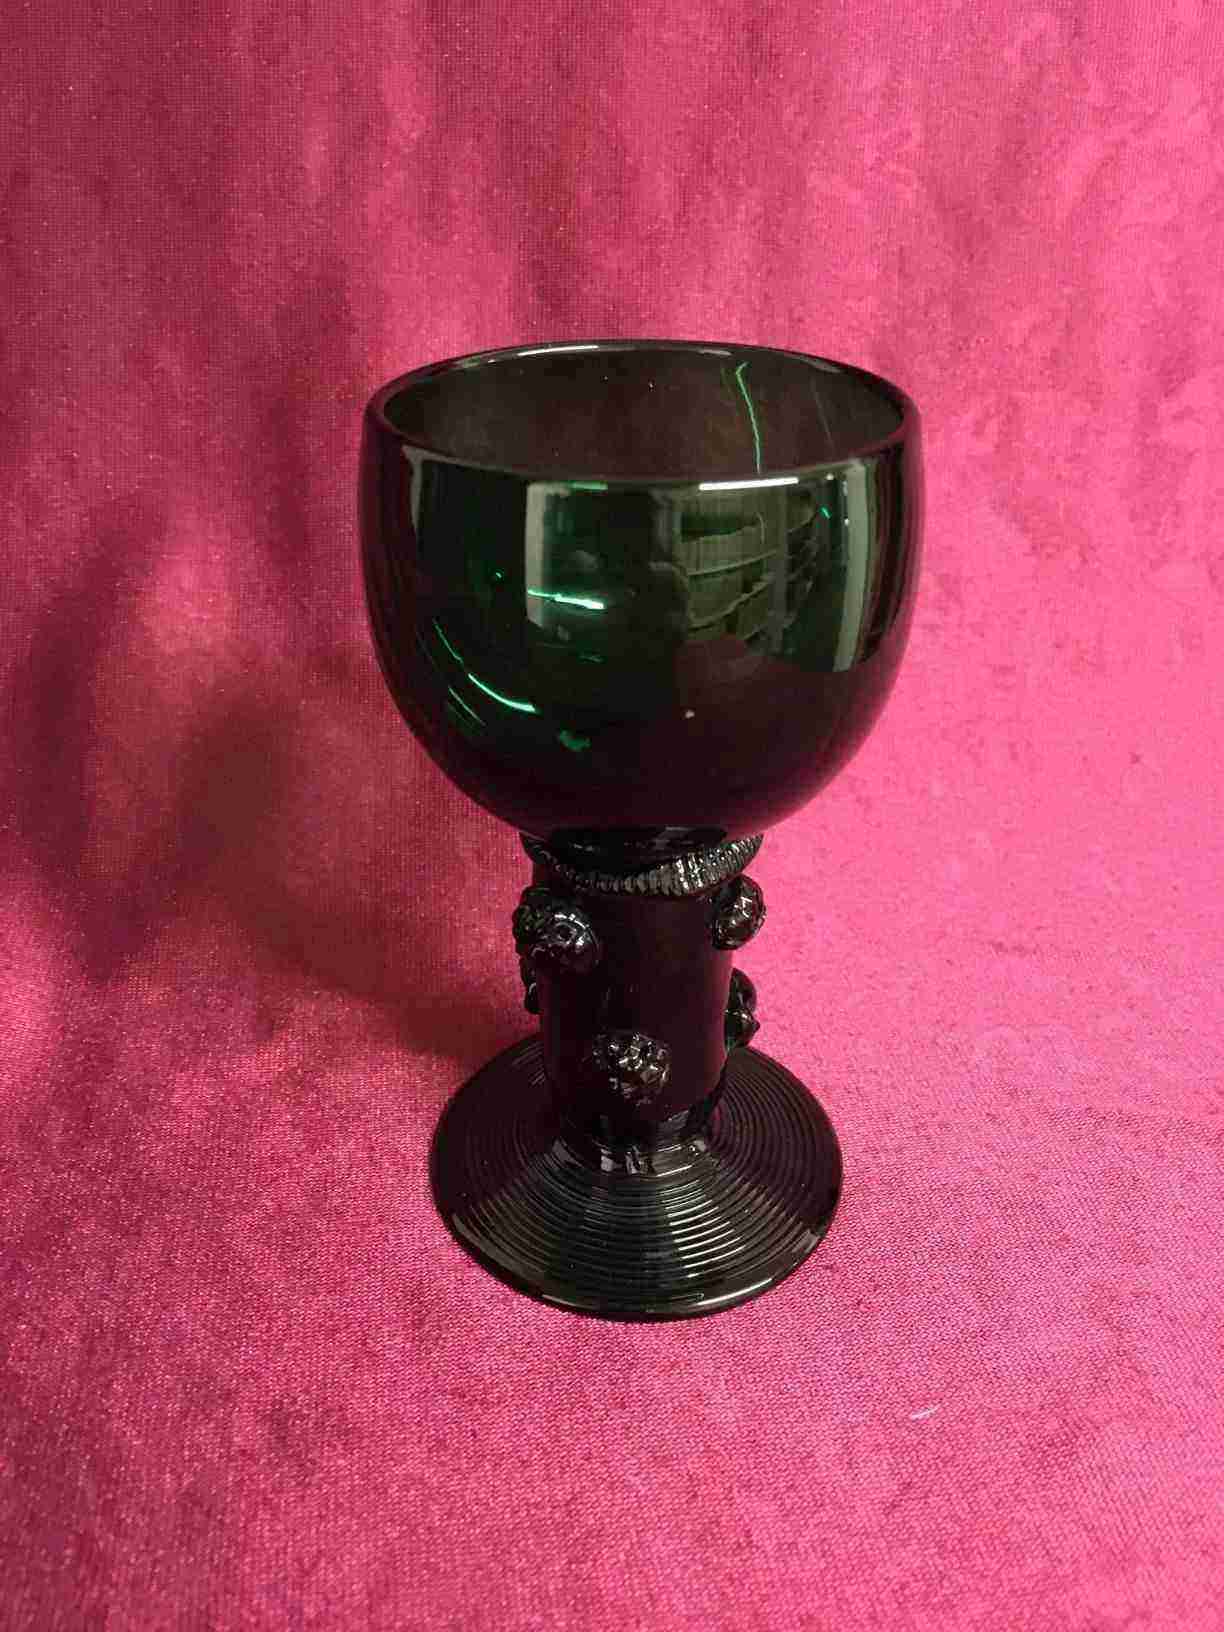 Holmegaard Rhinskviinglas nr. 3 - Römer glas i mørkegrøn krystal, med hul stilk, påsat 6 rosetter fra 1853 i perfekt stand. Pris: 625,- Kr. pr. stk. (12 stk.)